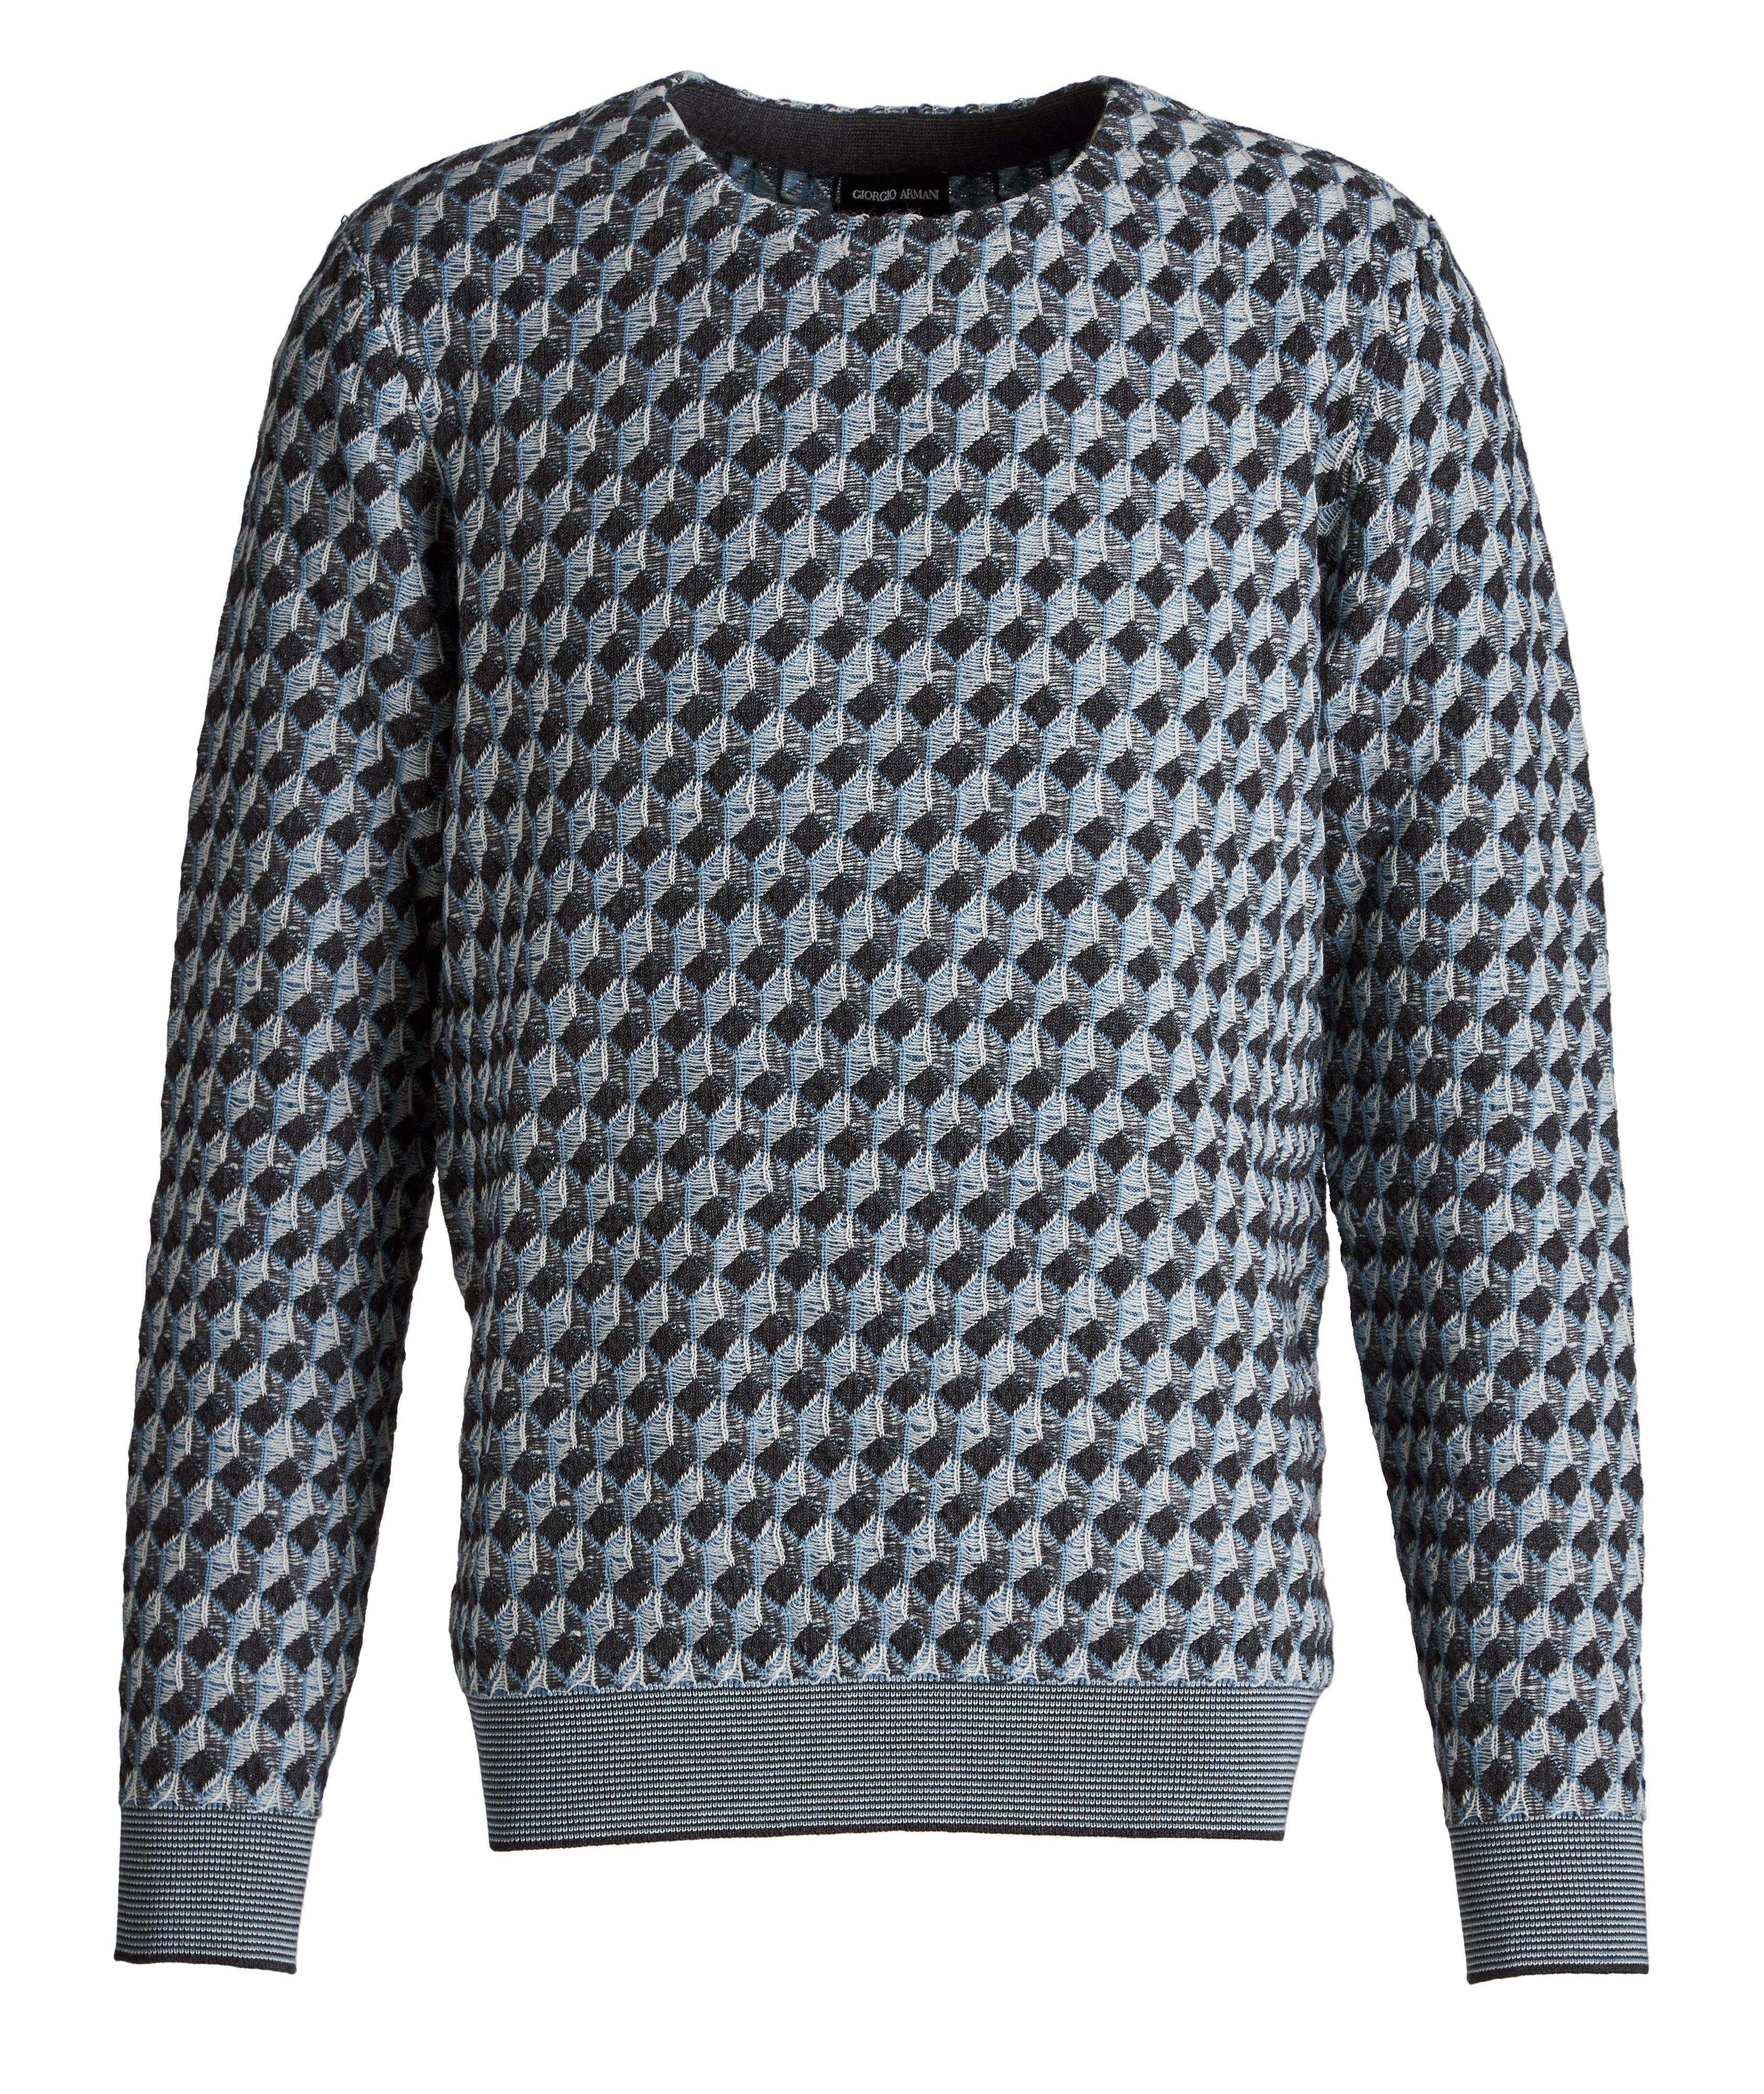 Jacquard Wool Sweater image 0